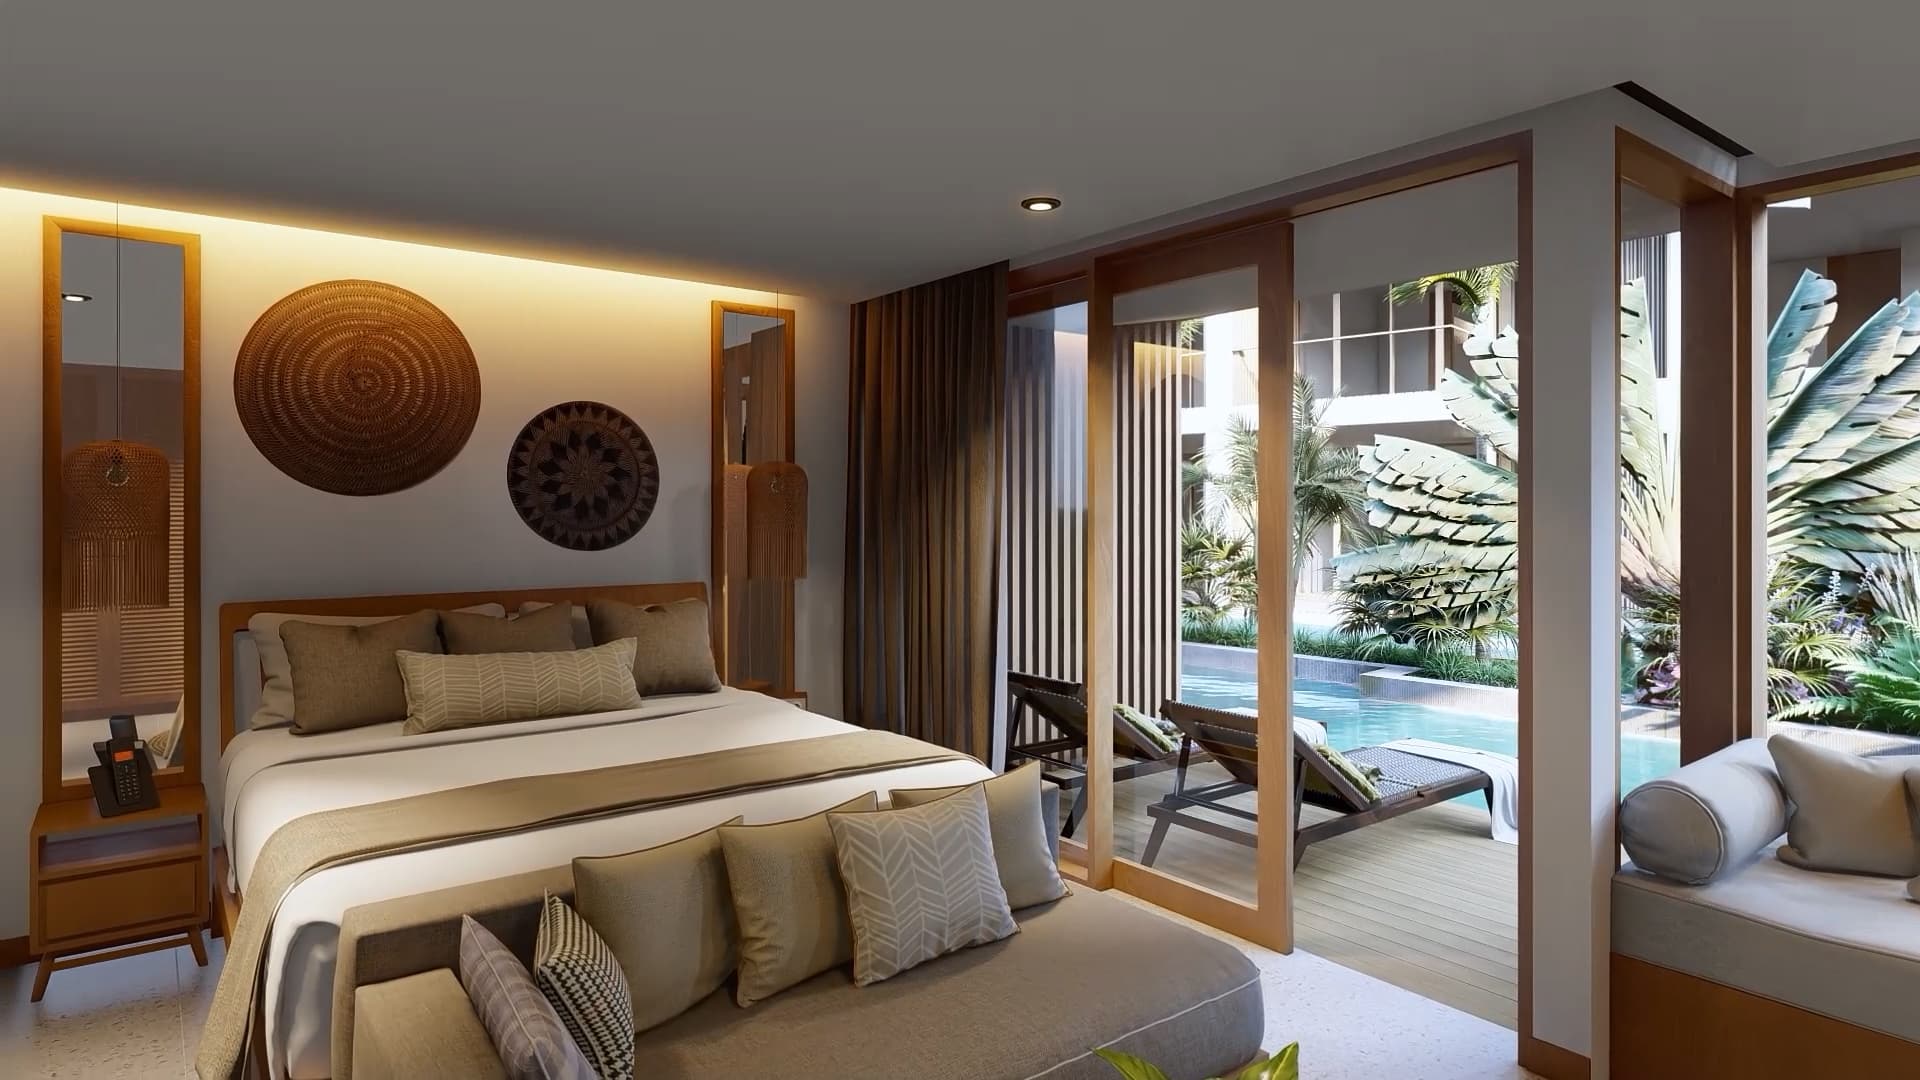 1 Bedroom Apartment For Sale Bali Lp08525 12489f481a12b400.jpg